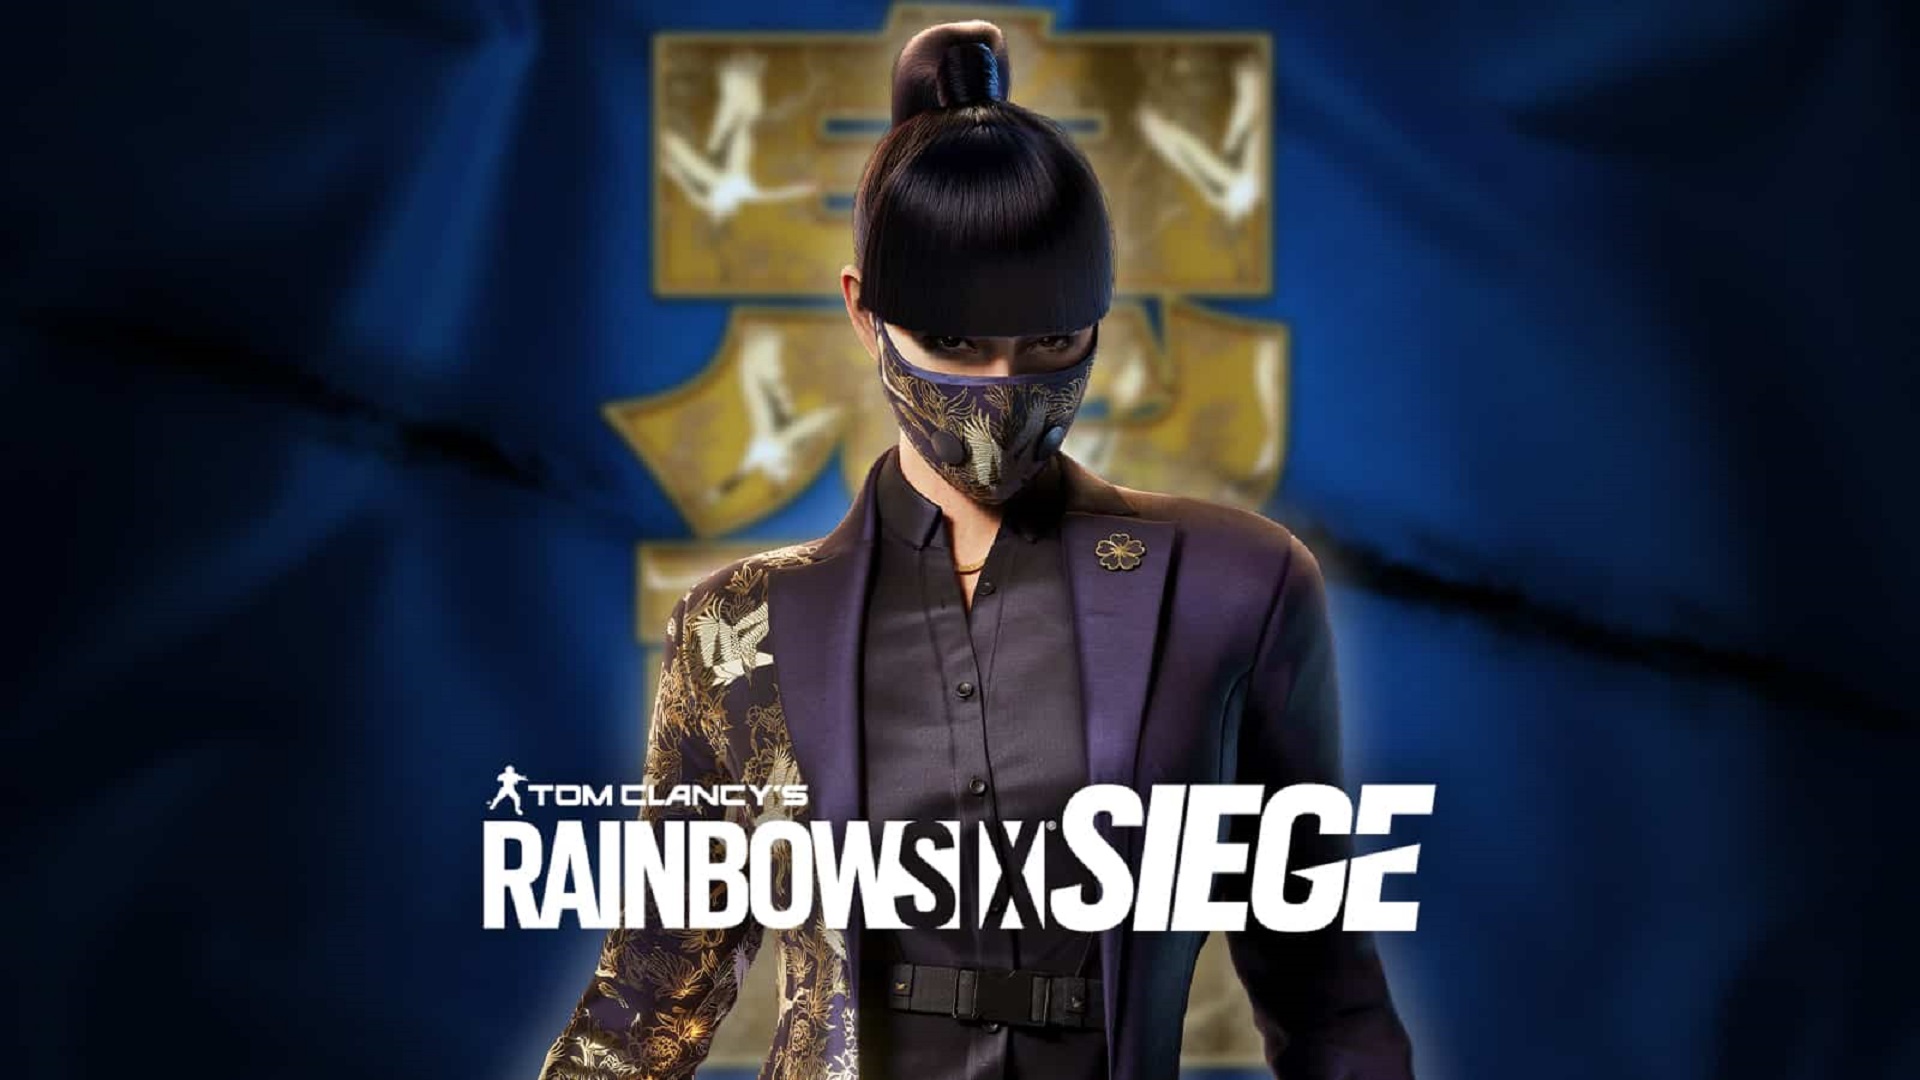 Rainbow Six Siege's Year 7 roadmap delays cross-play update